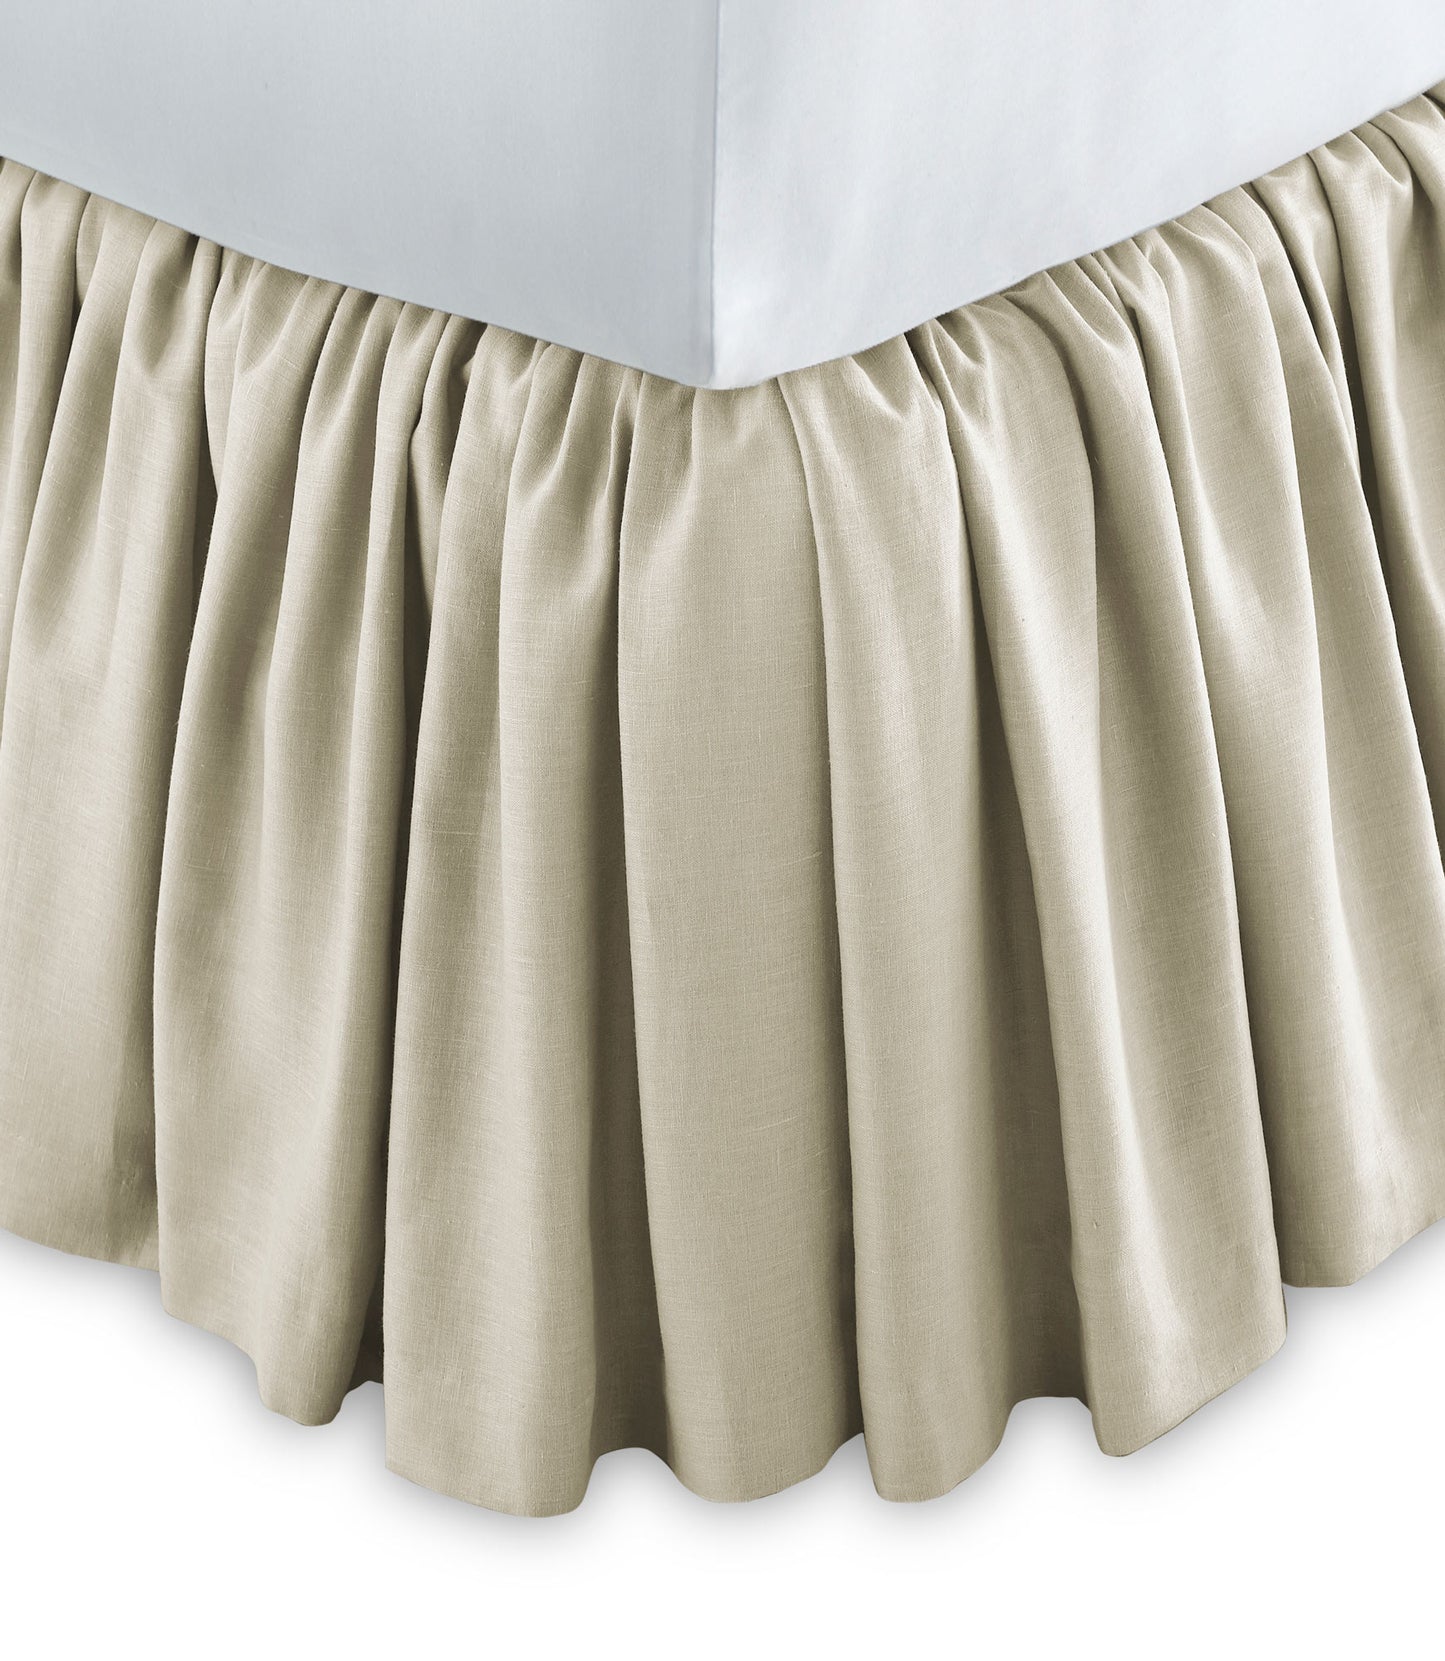 Mandalay Ruffled Linen Bed Skirt Platinum